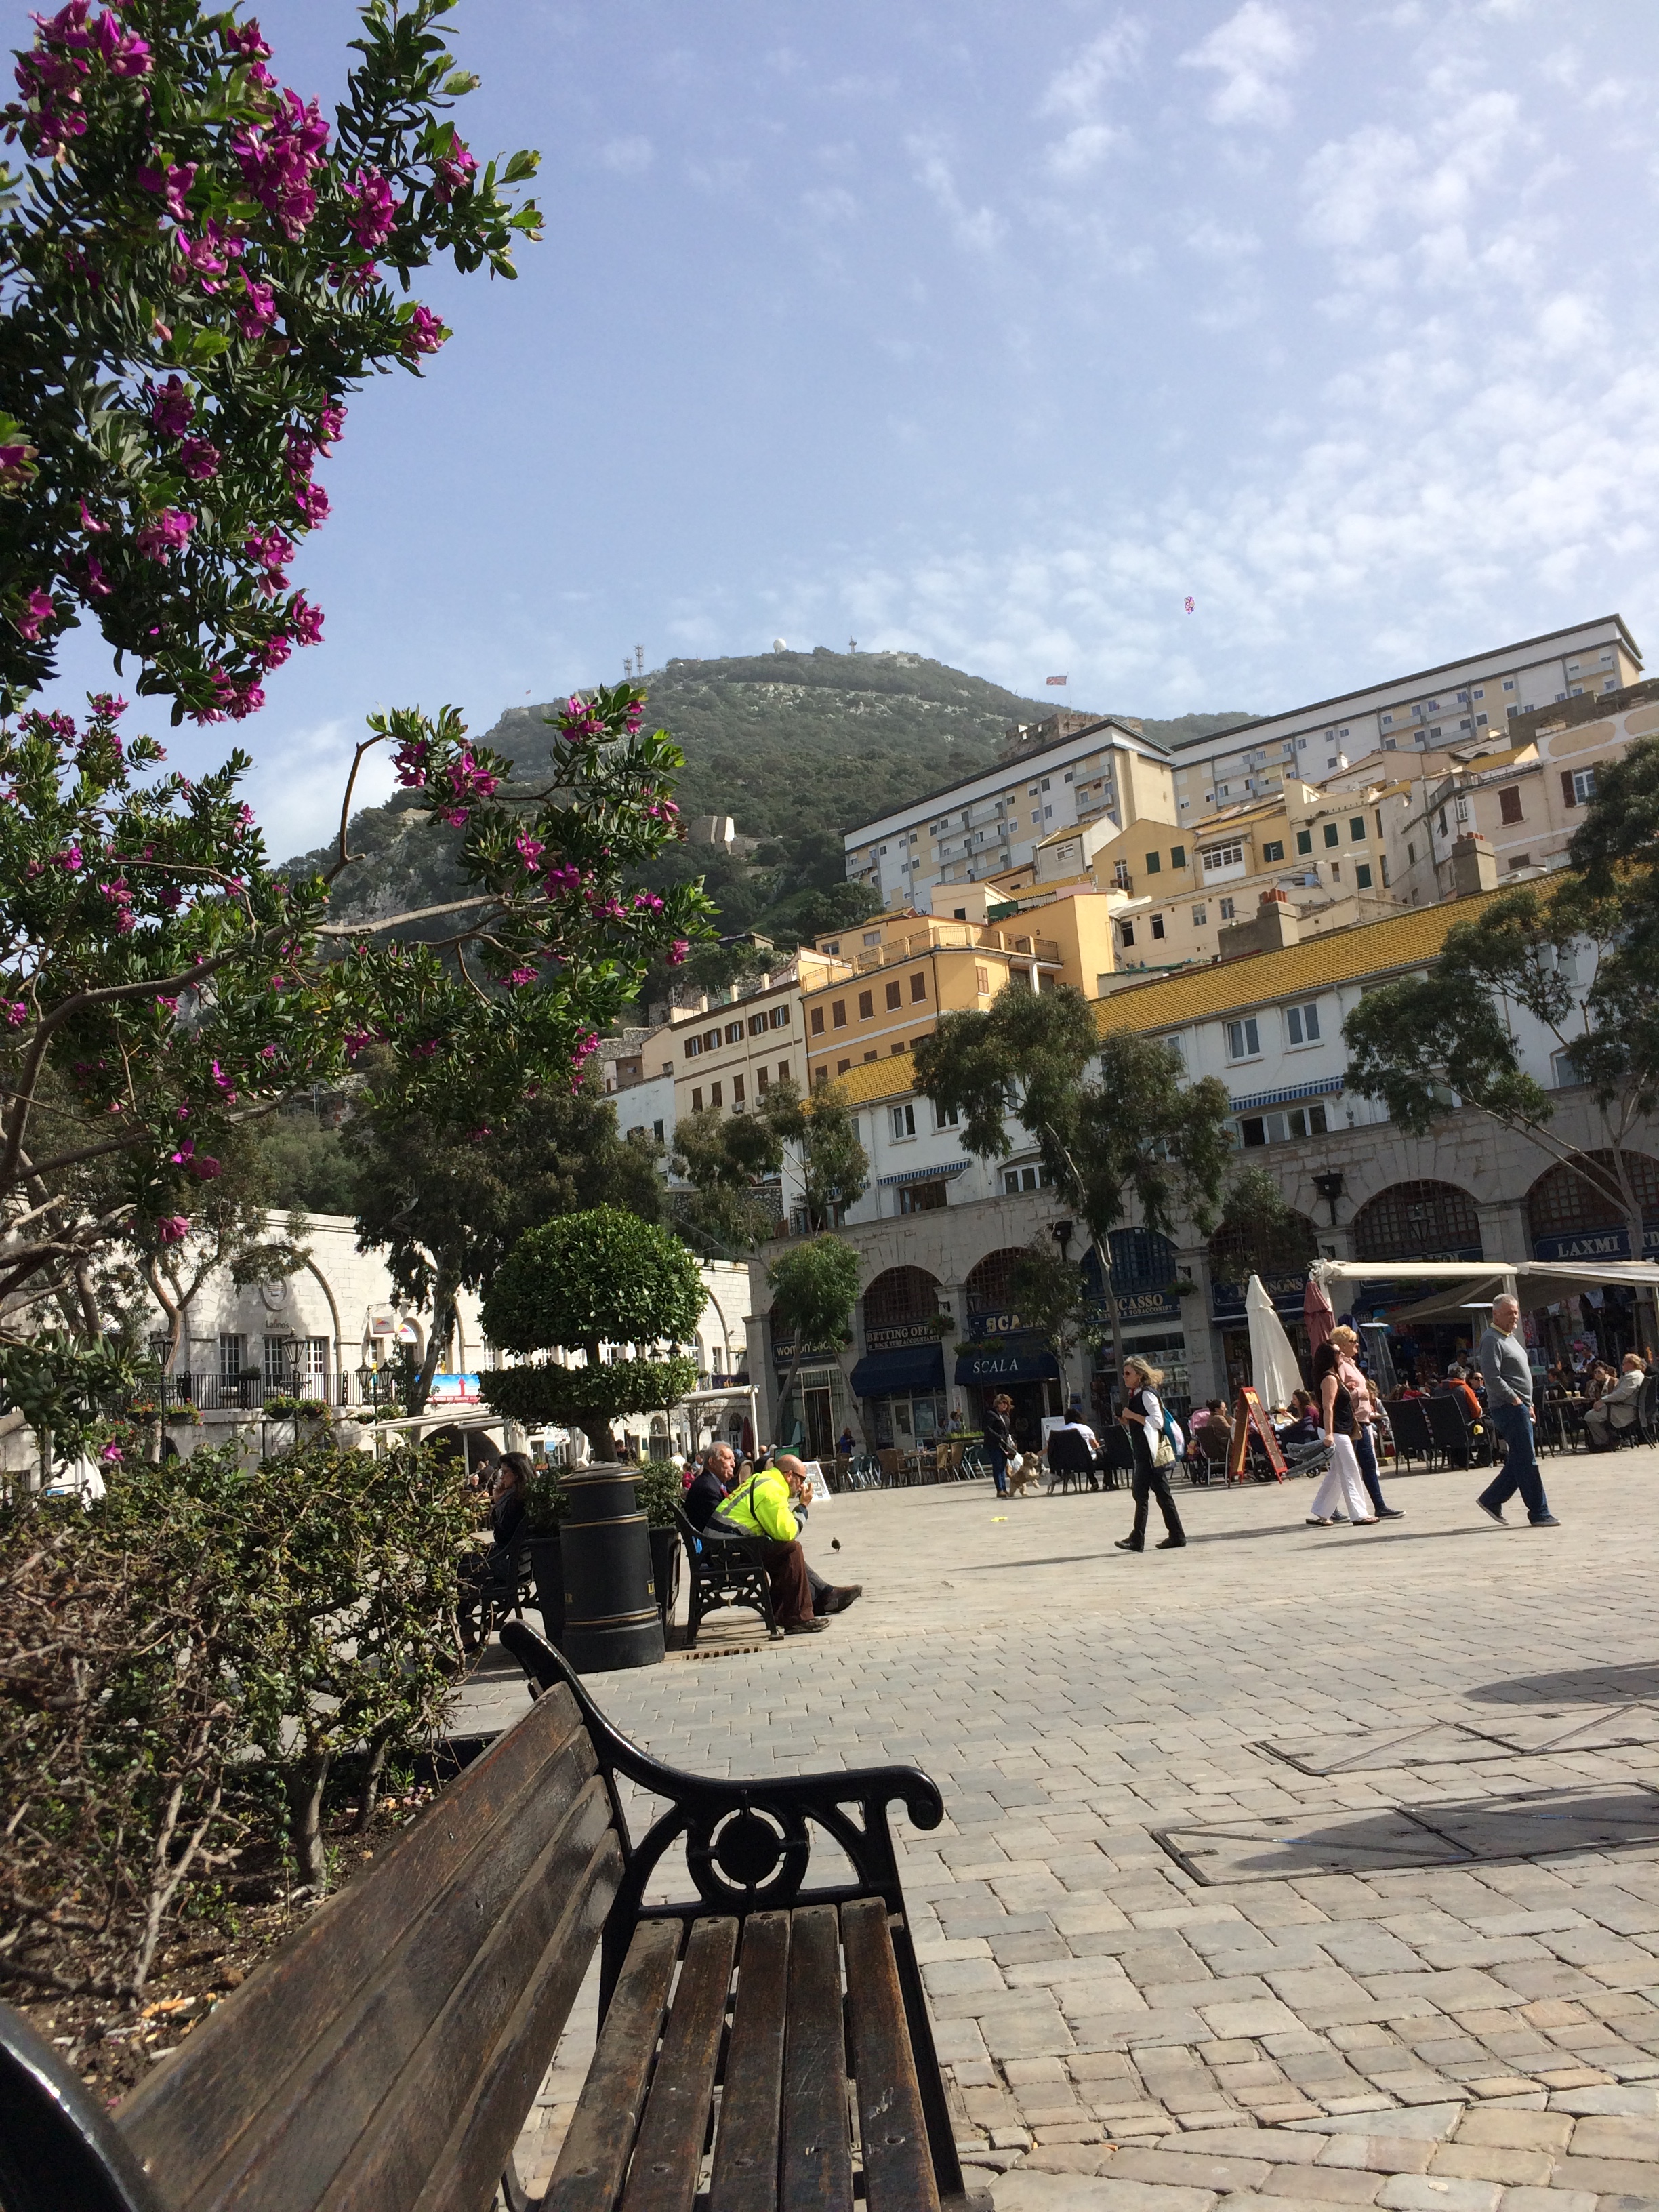 Image in the main square in Gibraltar